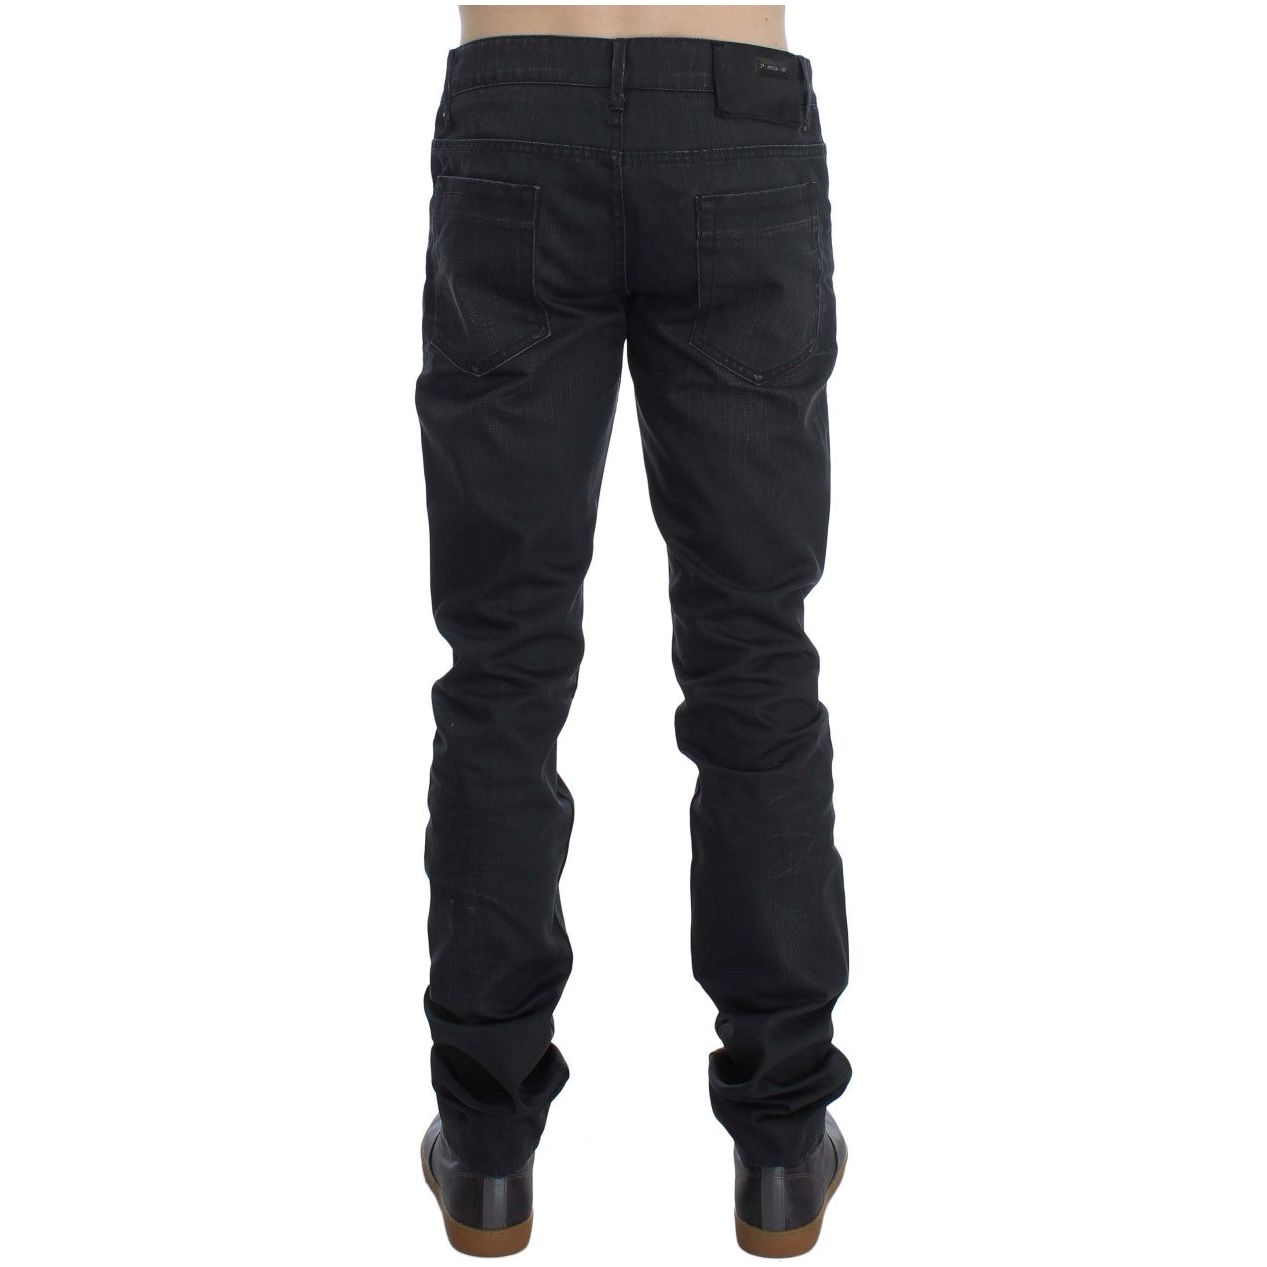 Acht Sleek Gray Slim Fit Italian Mens Jeans gray-cotton-skinny-slim-fit-jeans 298809-gray-cotton-skinny-slim-fit-jeans-2.jpg